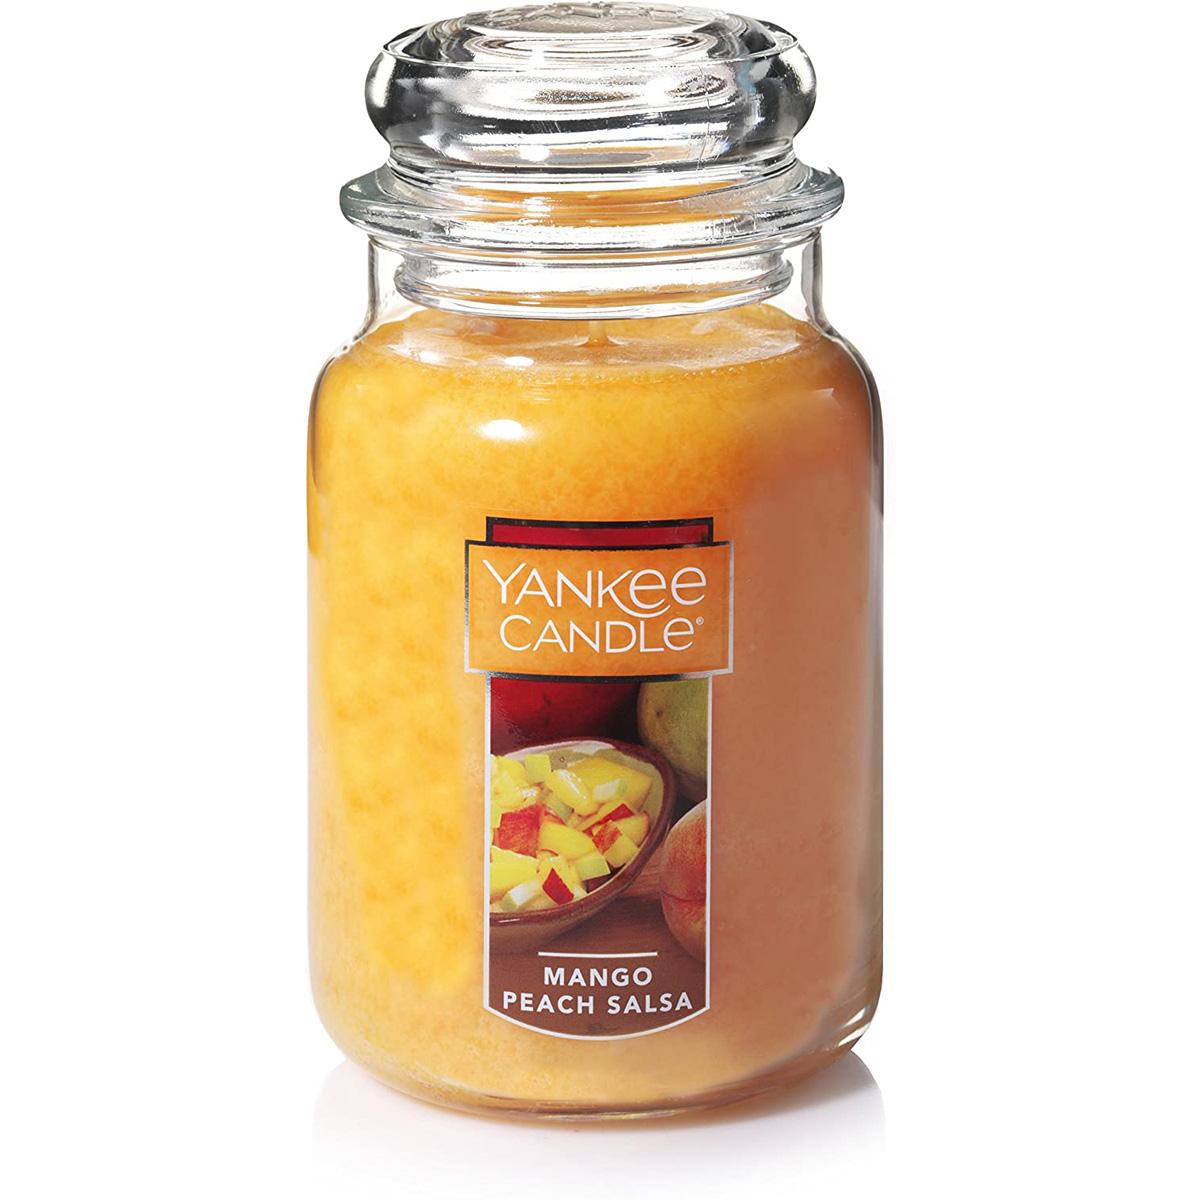 Yankee Candle Large Jar Candle Mango Peach Salsa for $14